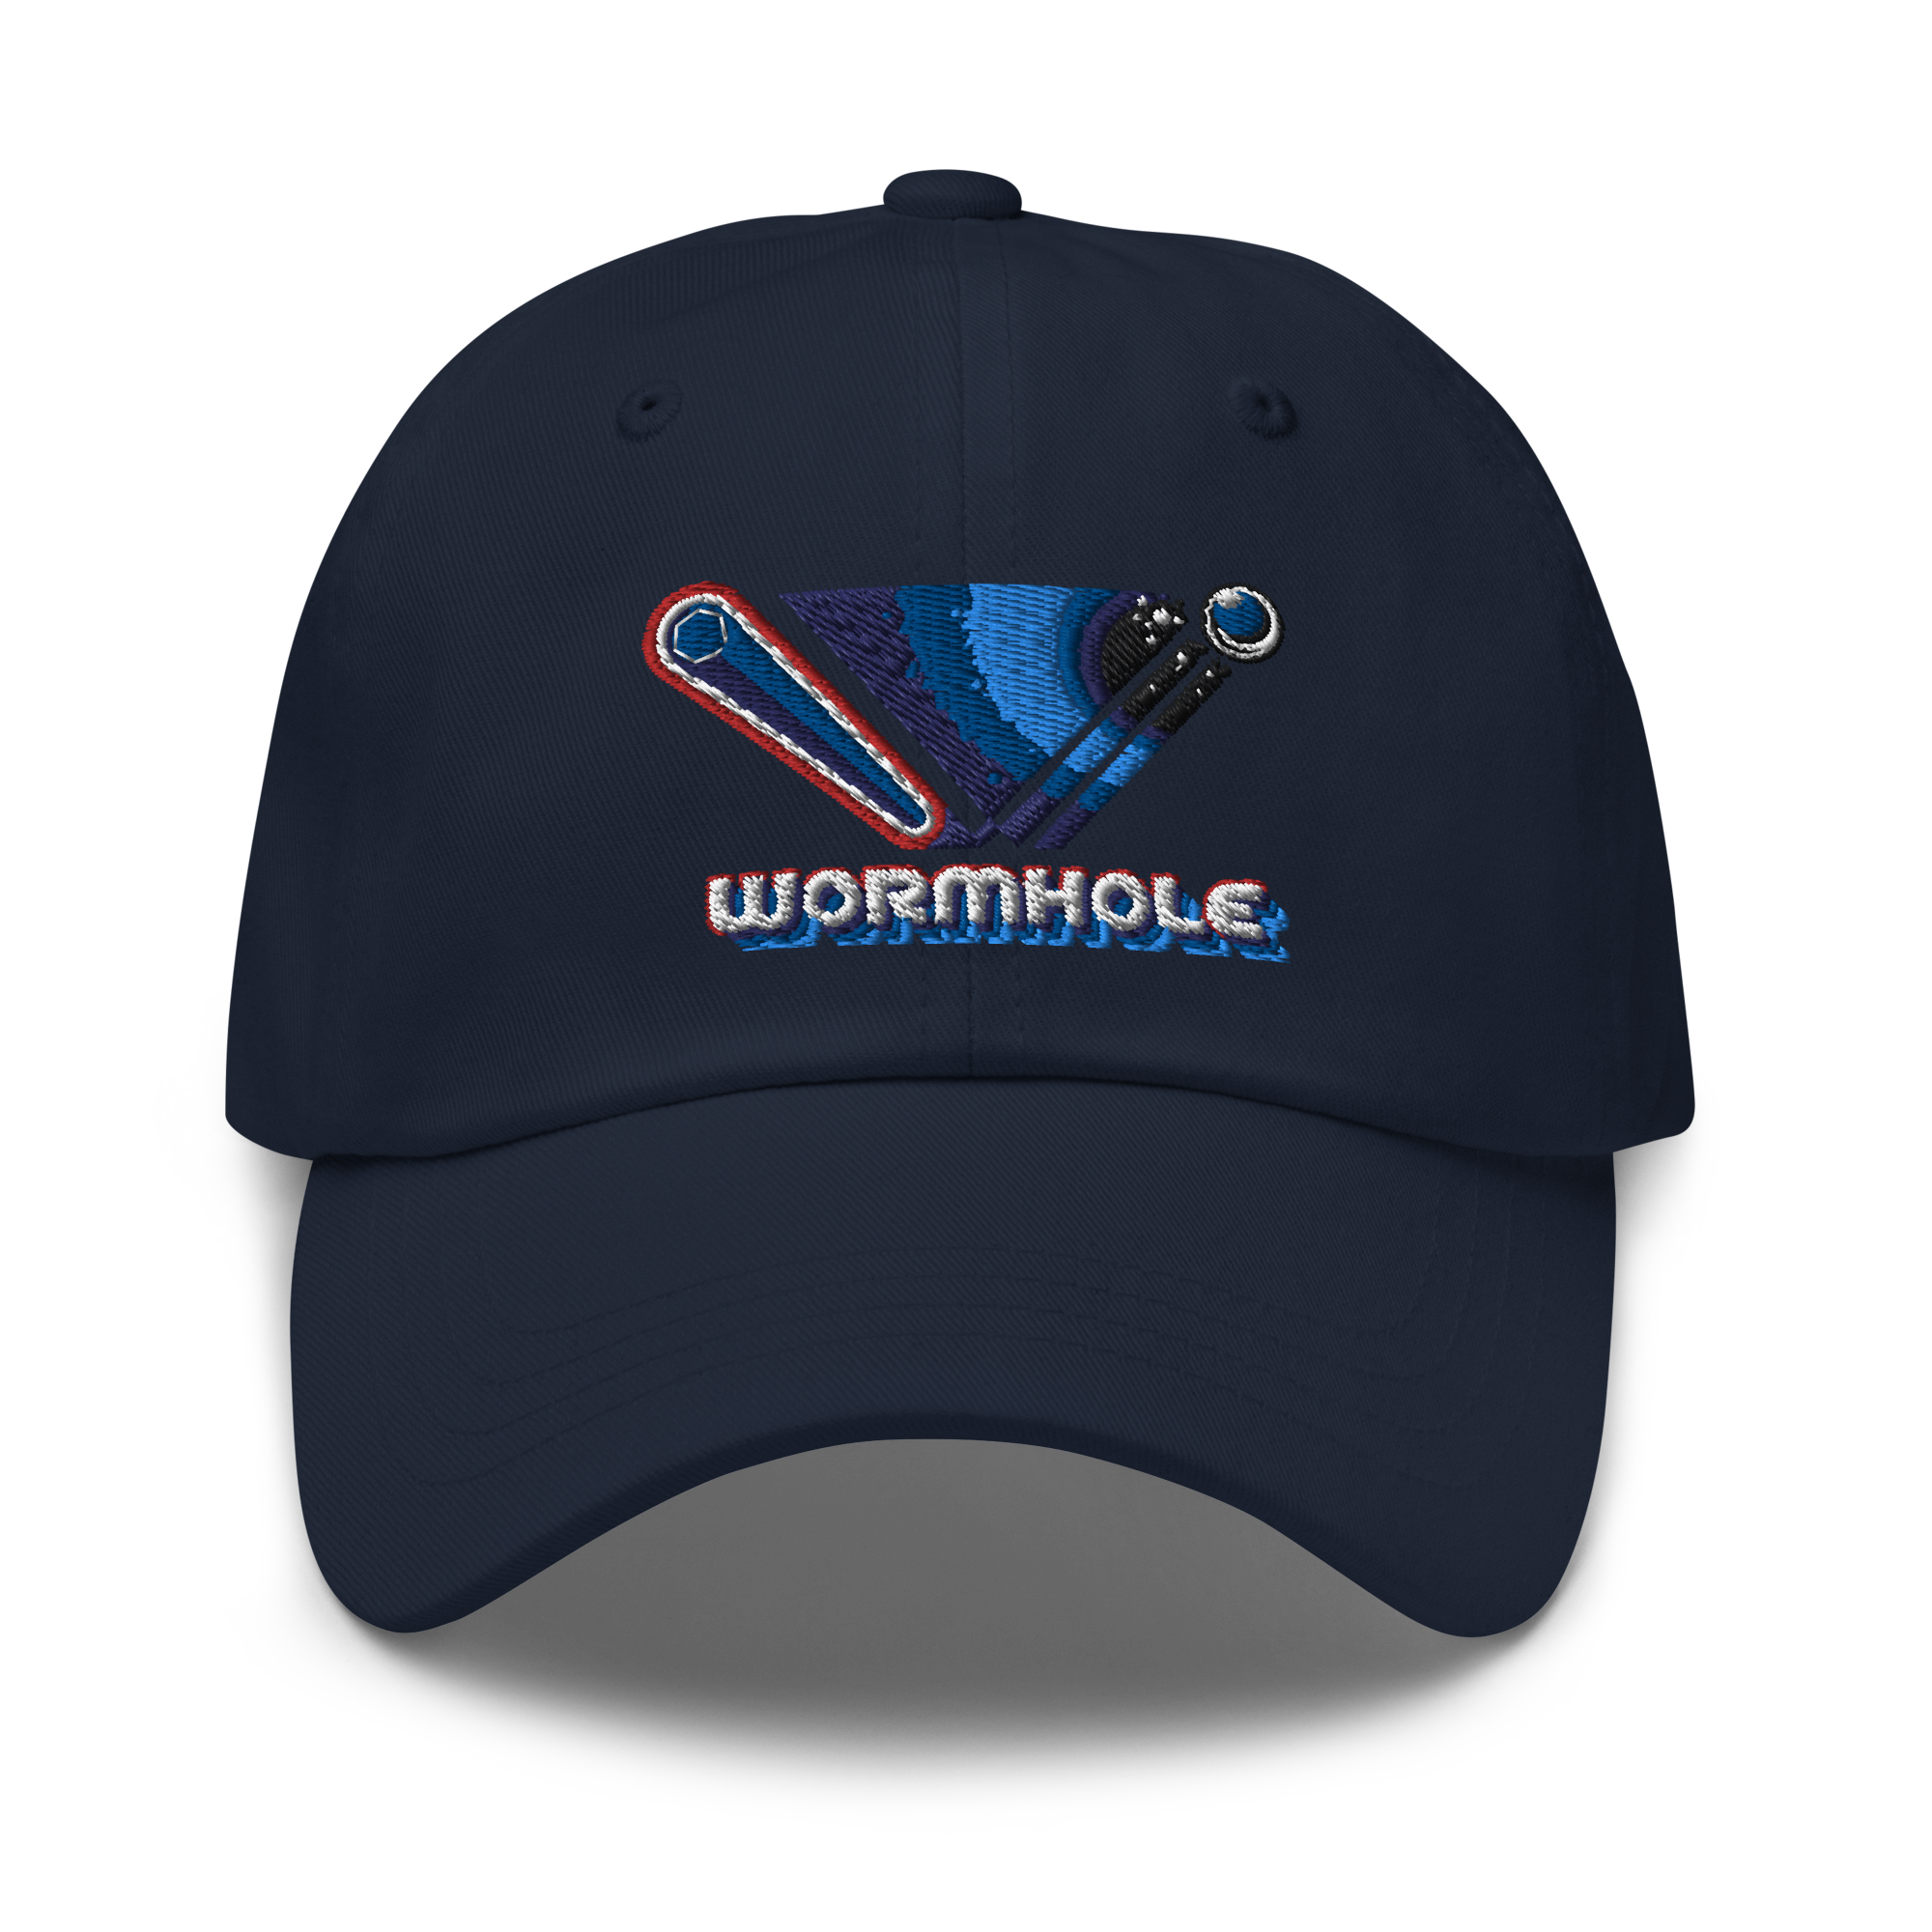 Wormhole Pinball - Dad hat